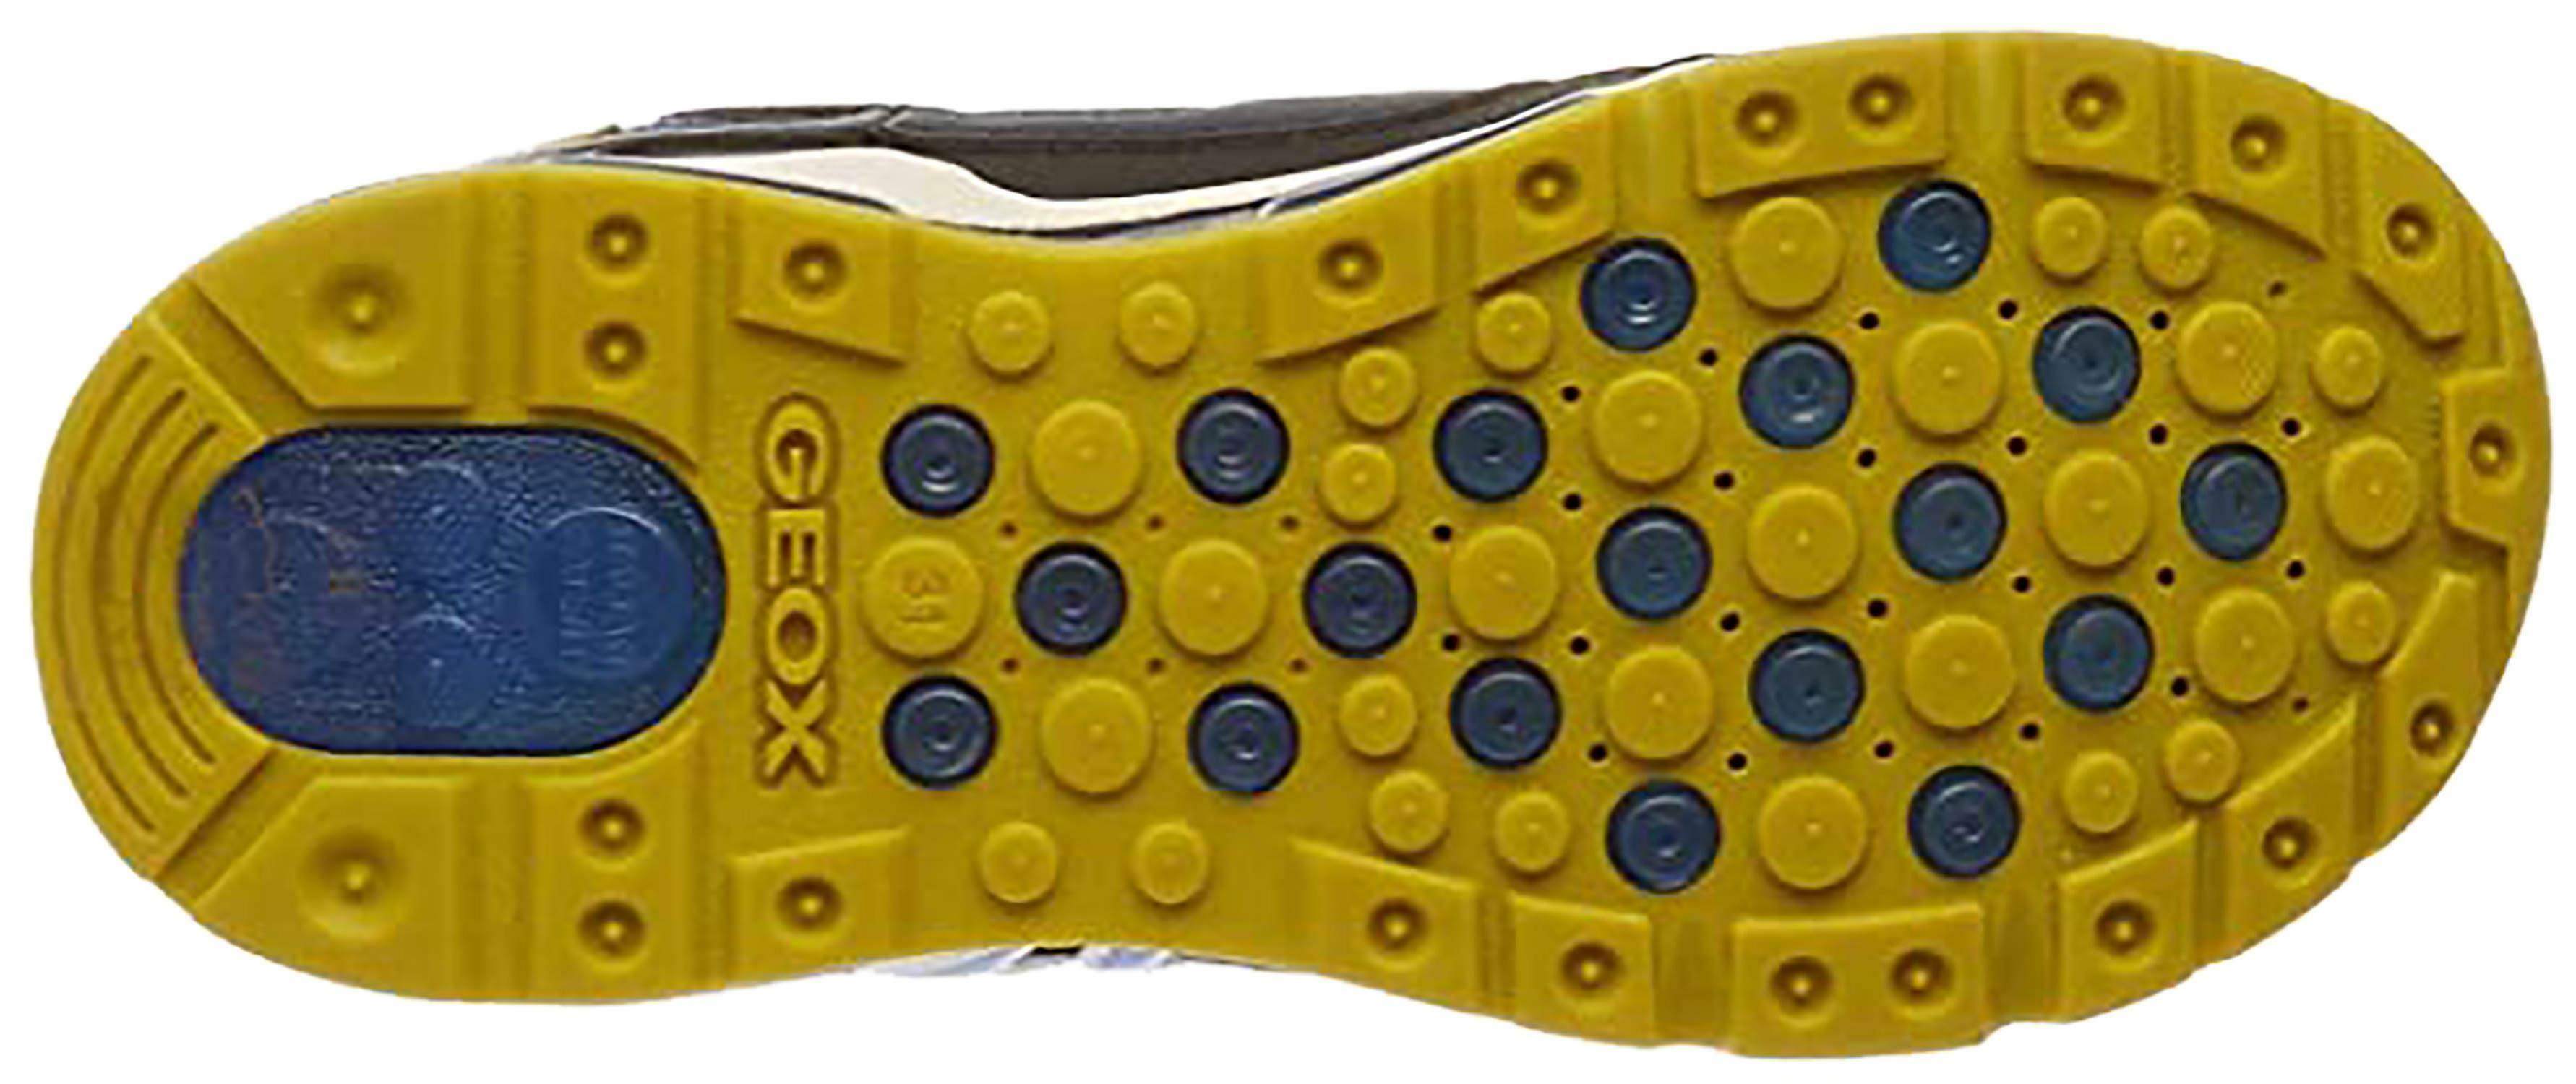 geox geox j android b scarpe sportive bambino blu j0444bc0749